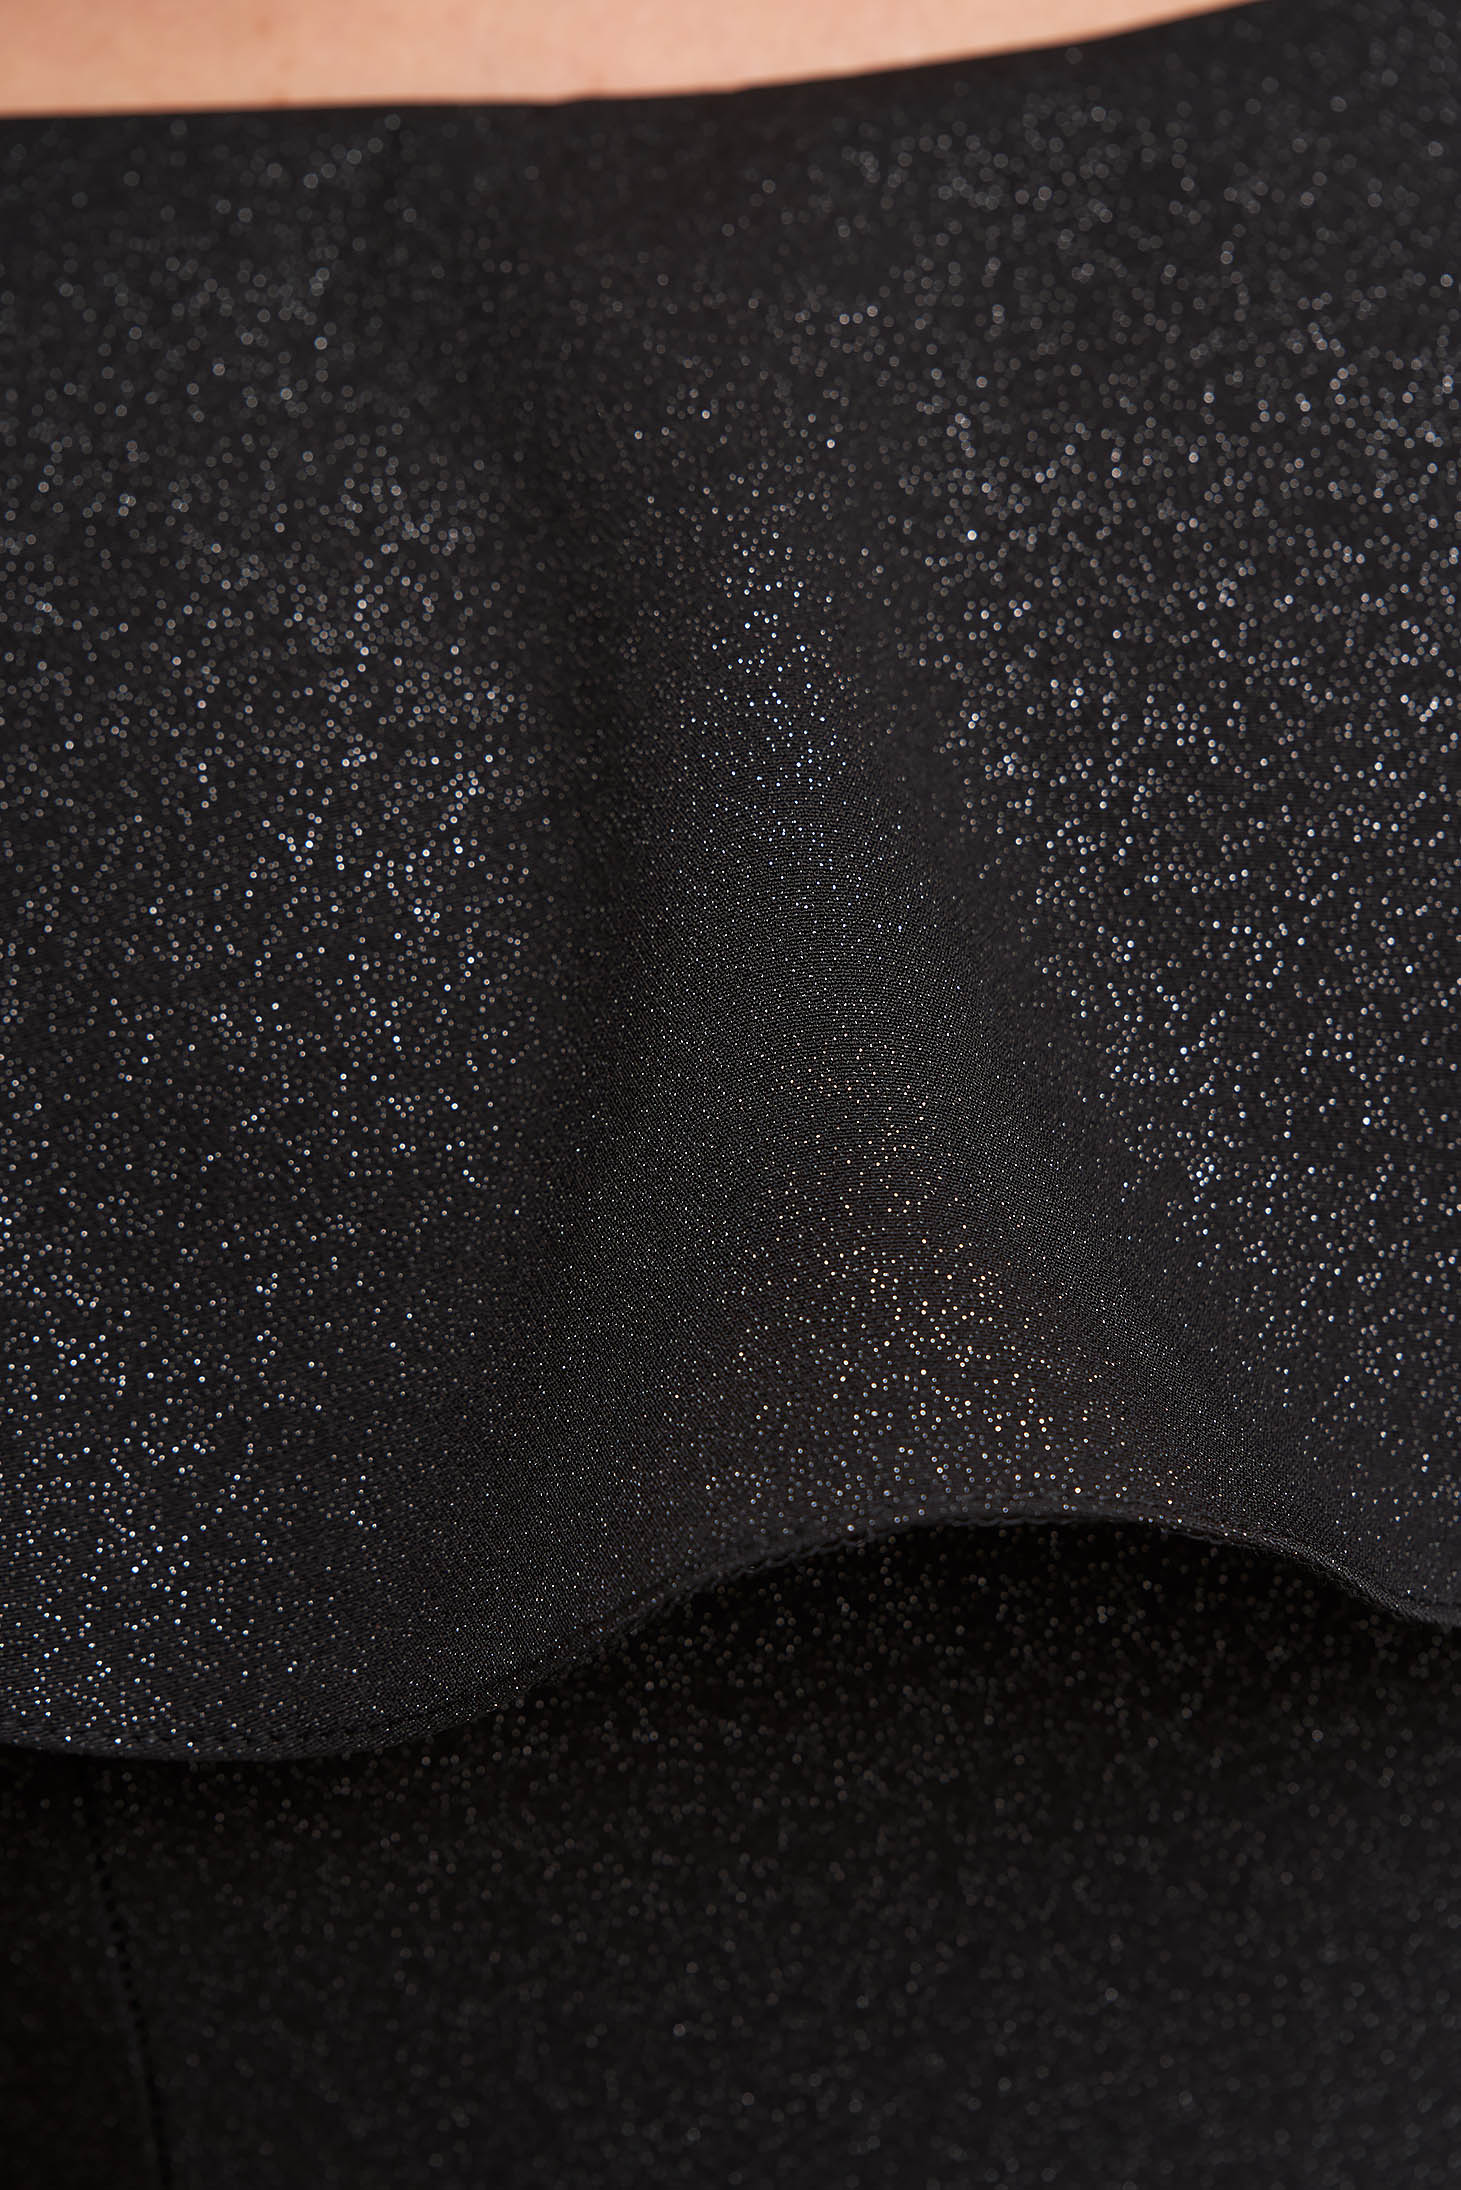 Rochie din stofa elastica neagra midi tip creion cu volanase pe linia decolteului - StarShinerS 5 - StarShinerS.ro